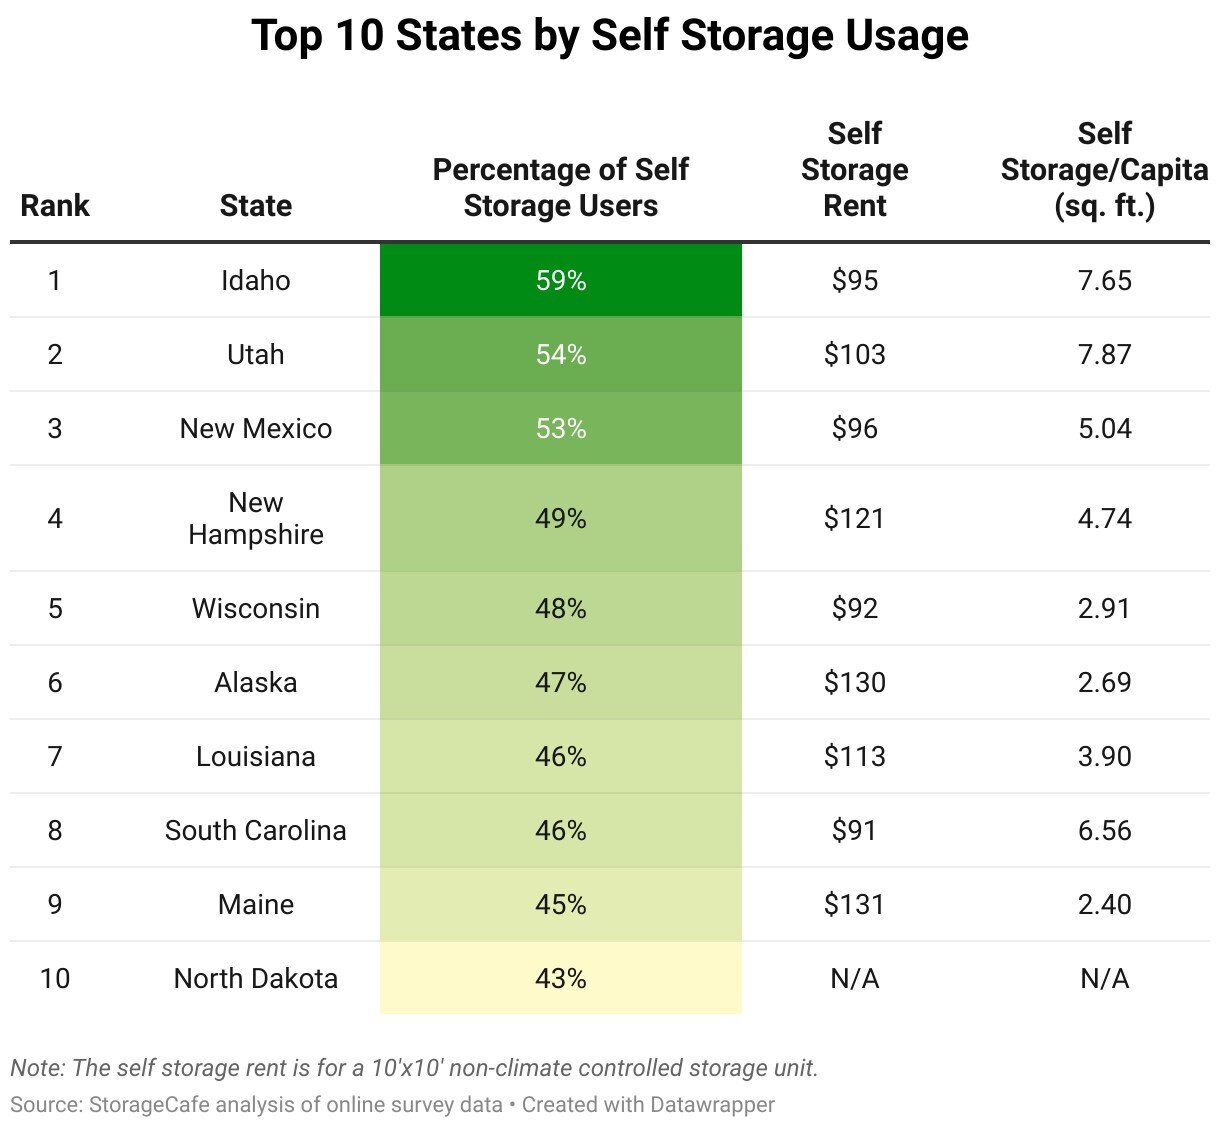 https://www.worldpropertyjournal.com/news-assets/top-10-states-by-self-storage-usage.jpg